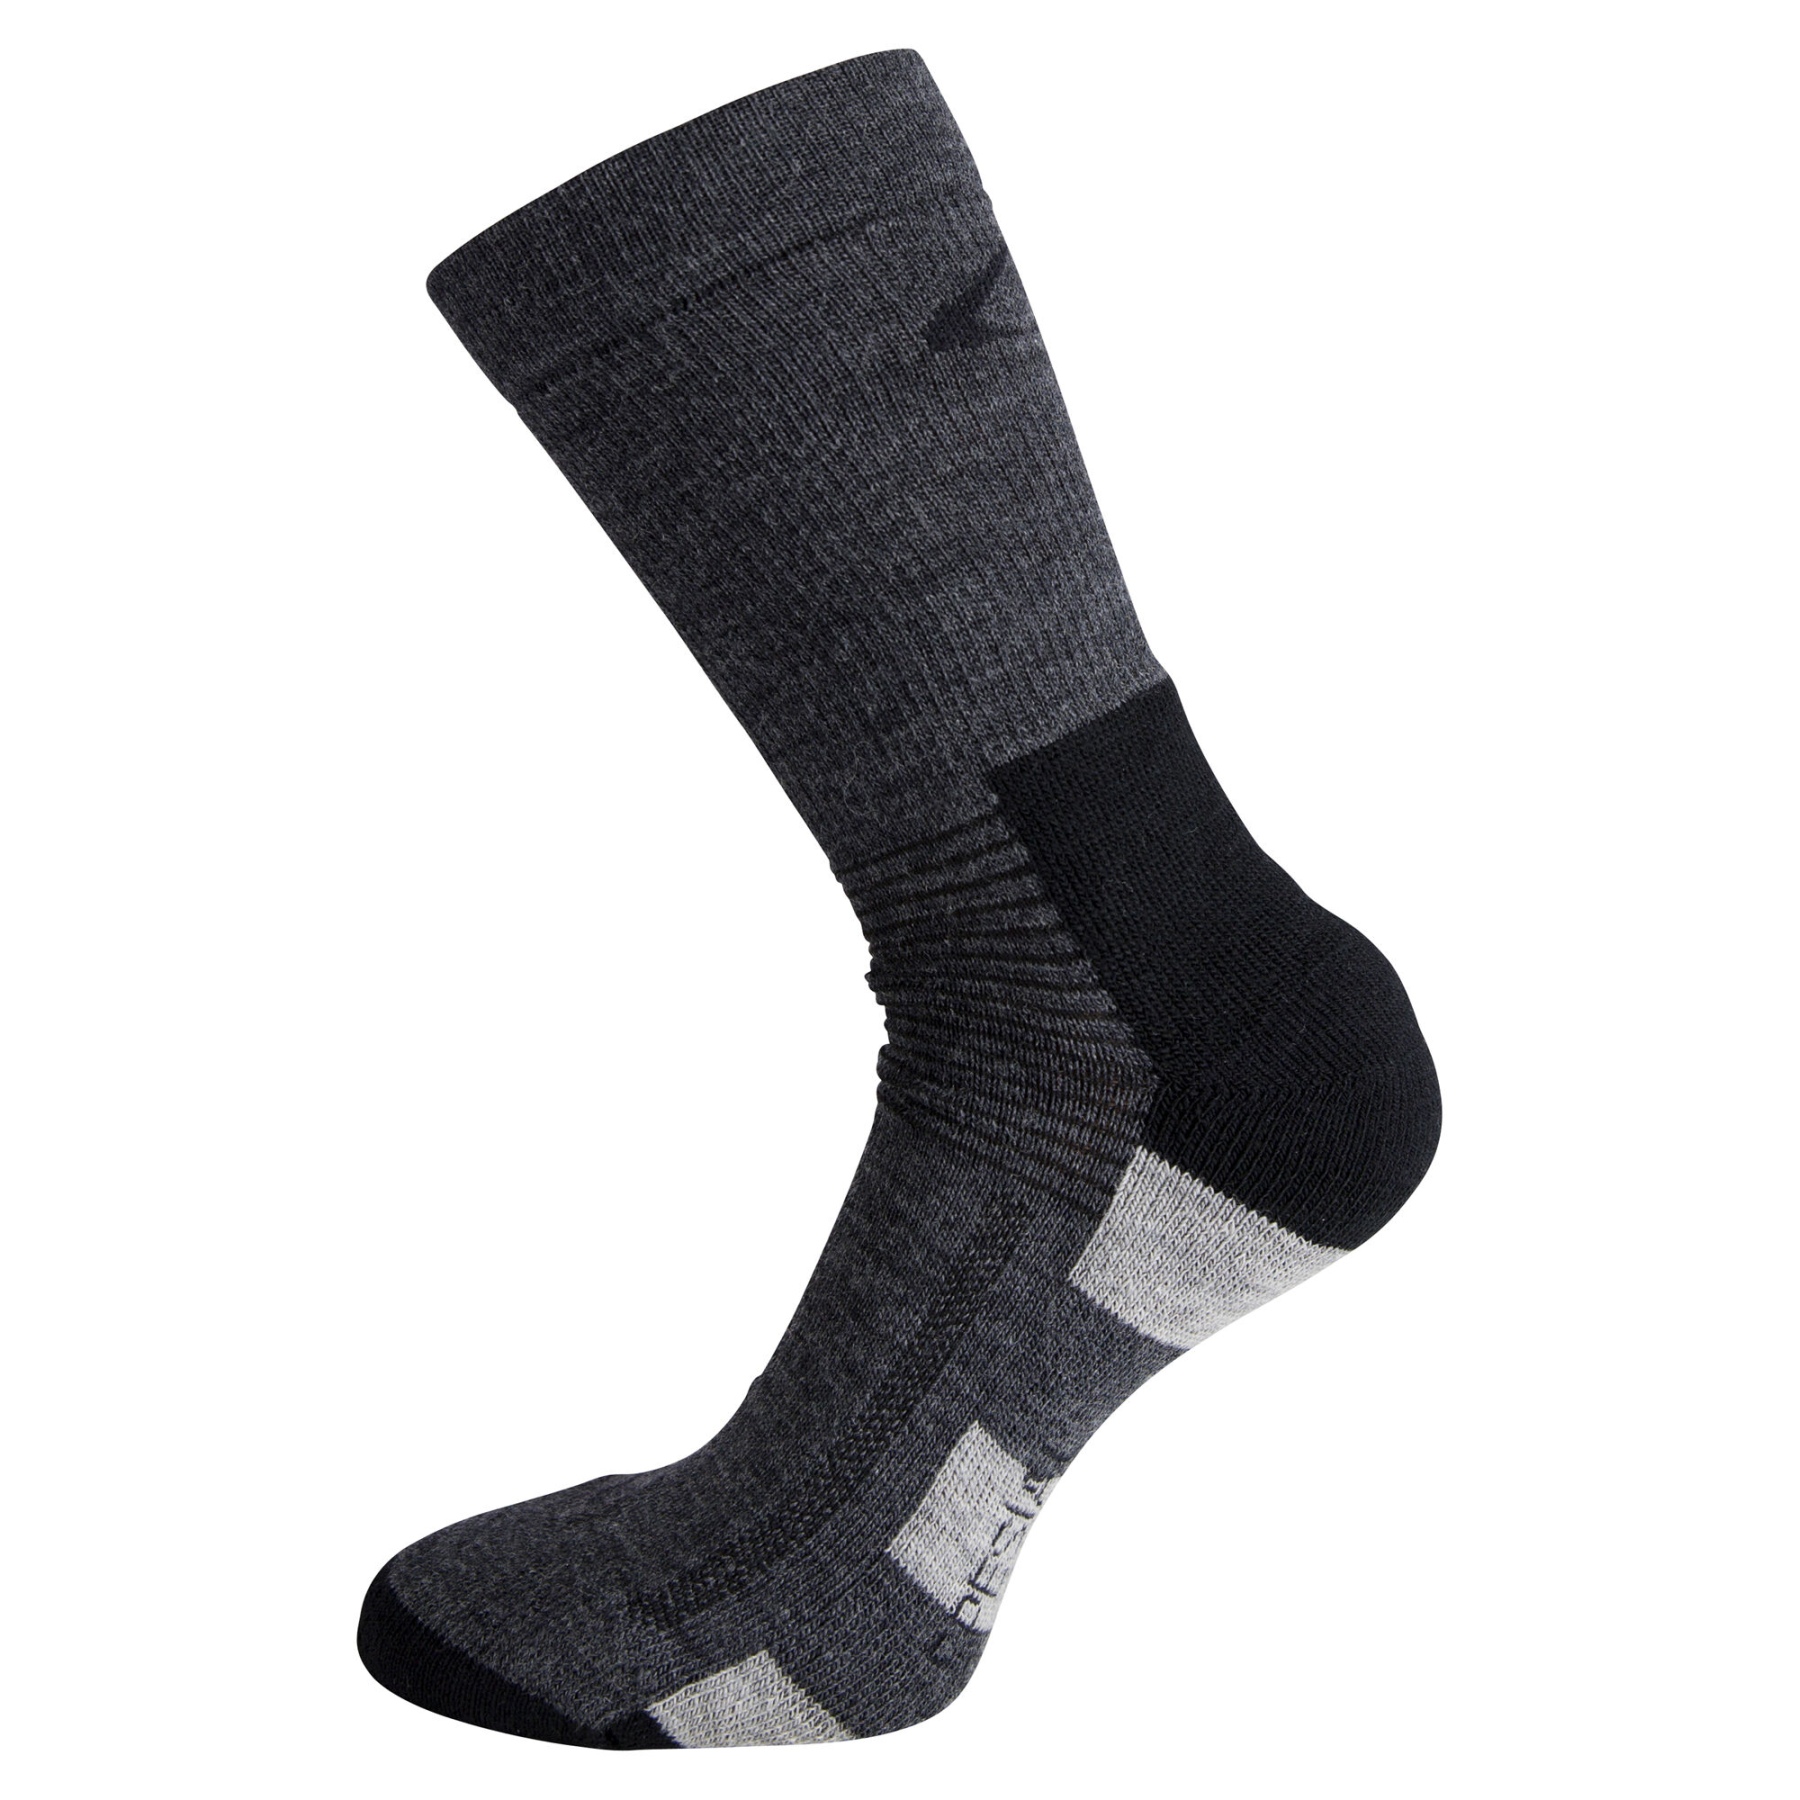 Image of Ulvang Spesial Socks - Charcoal Melange/Black Multistripe